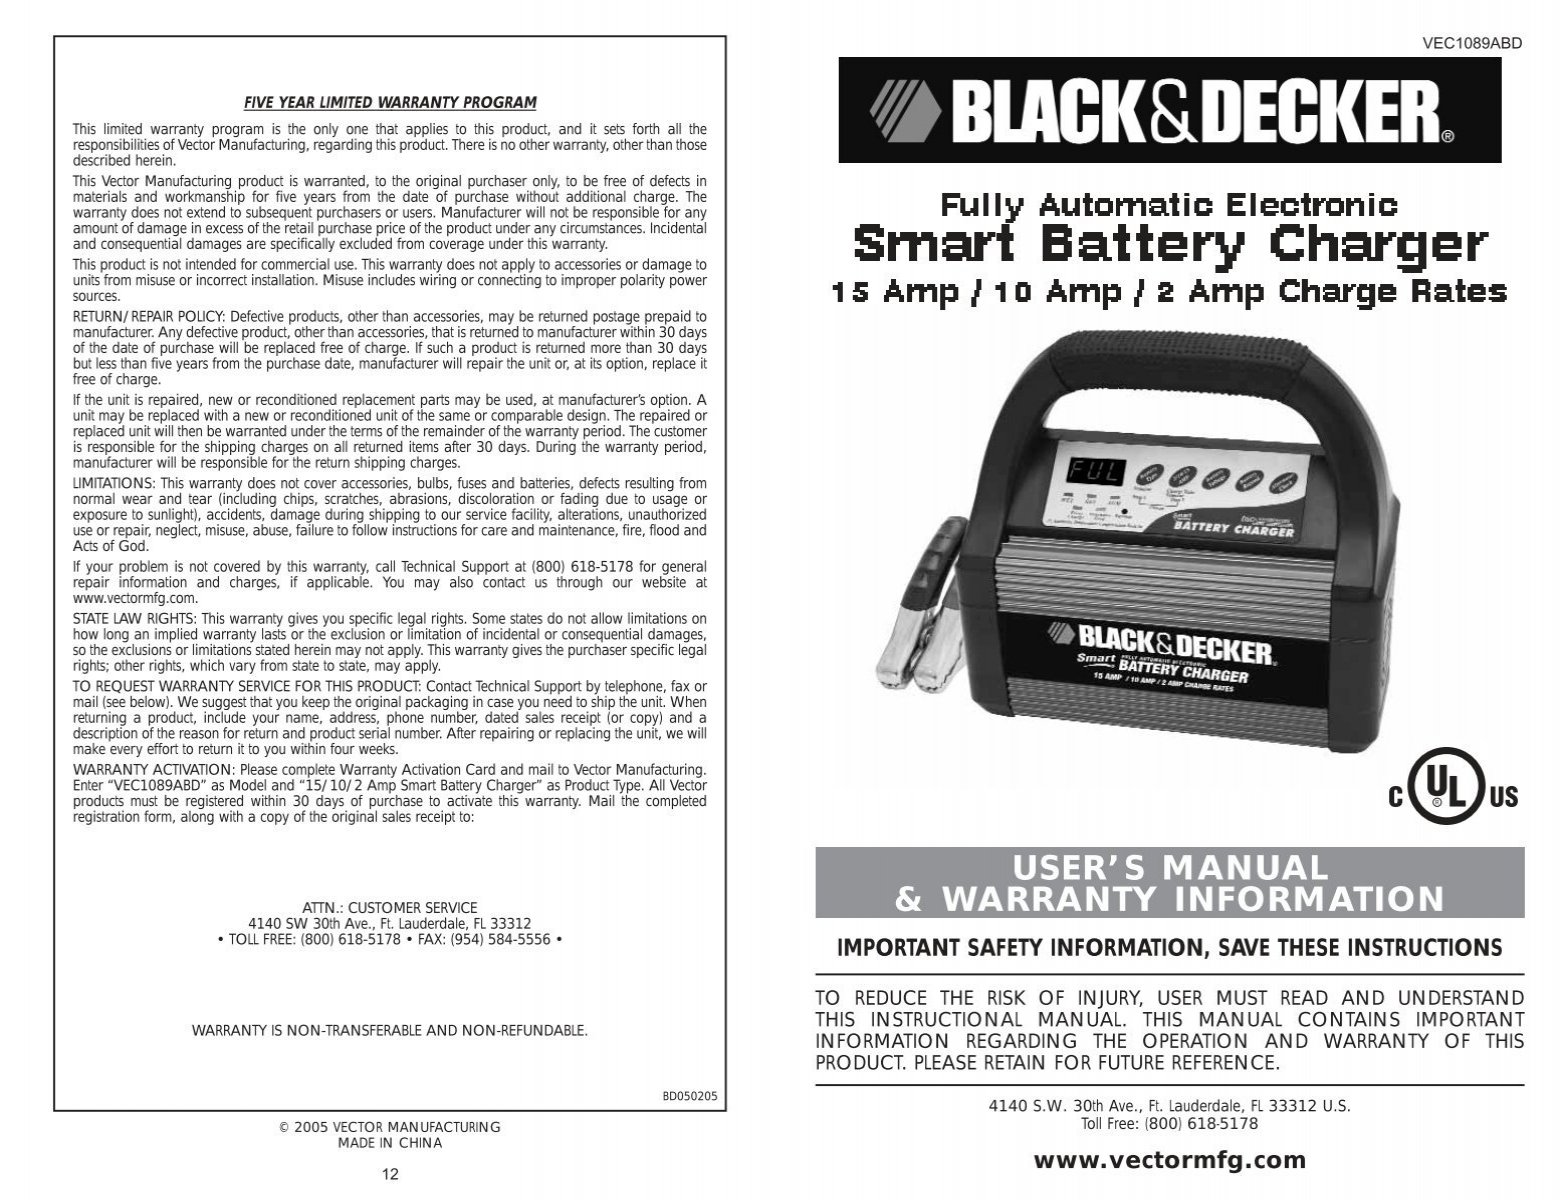 BLACK & DECKER SMART BATTERY CHARGER USER MANUAL Pdf Download